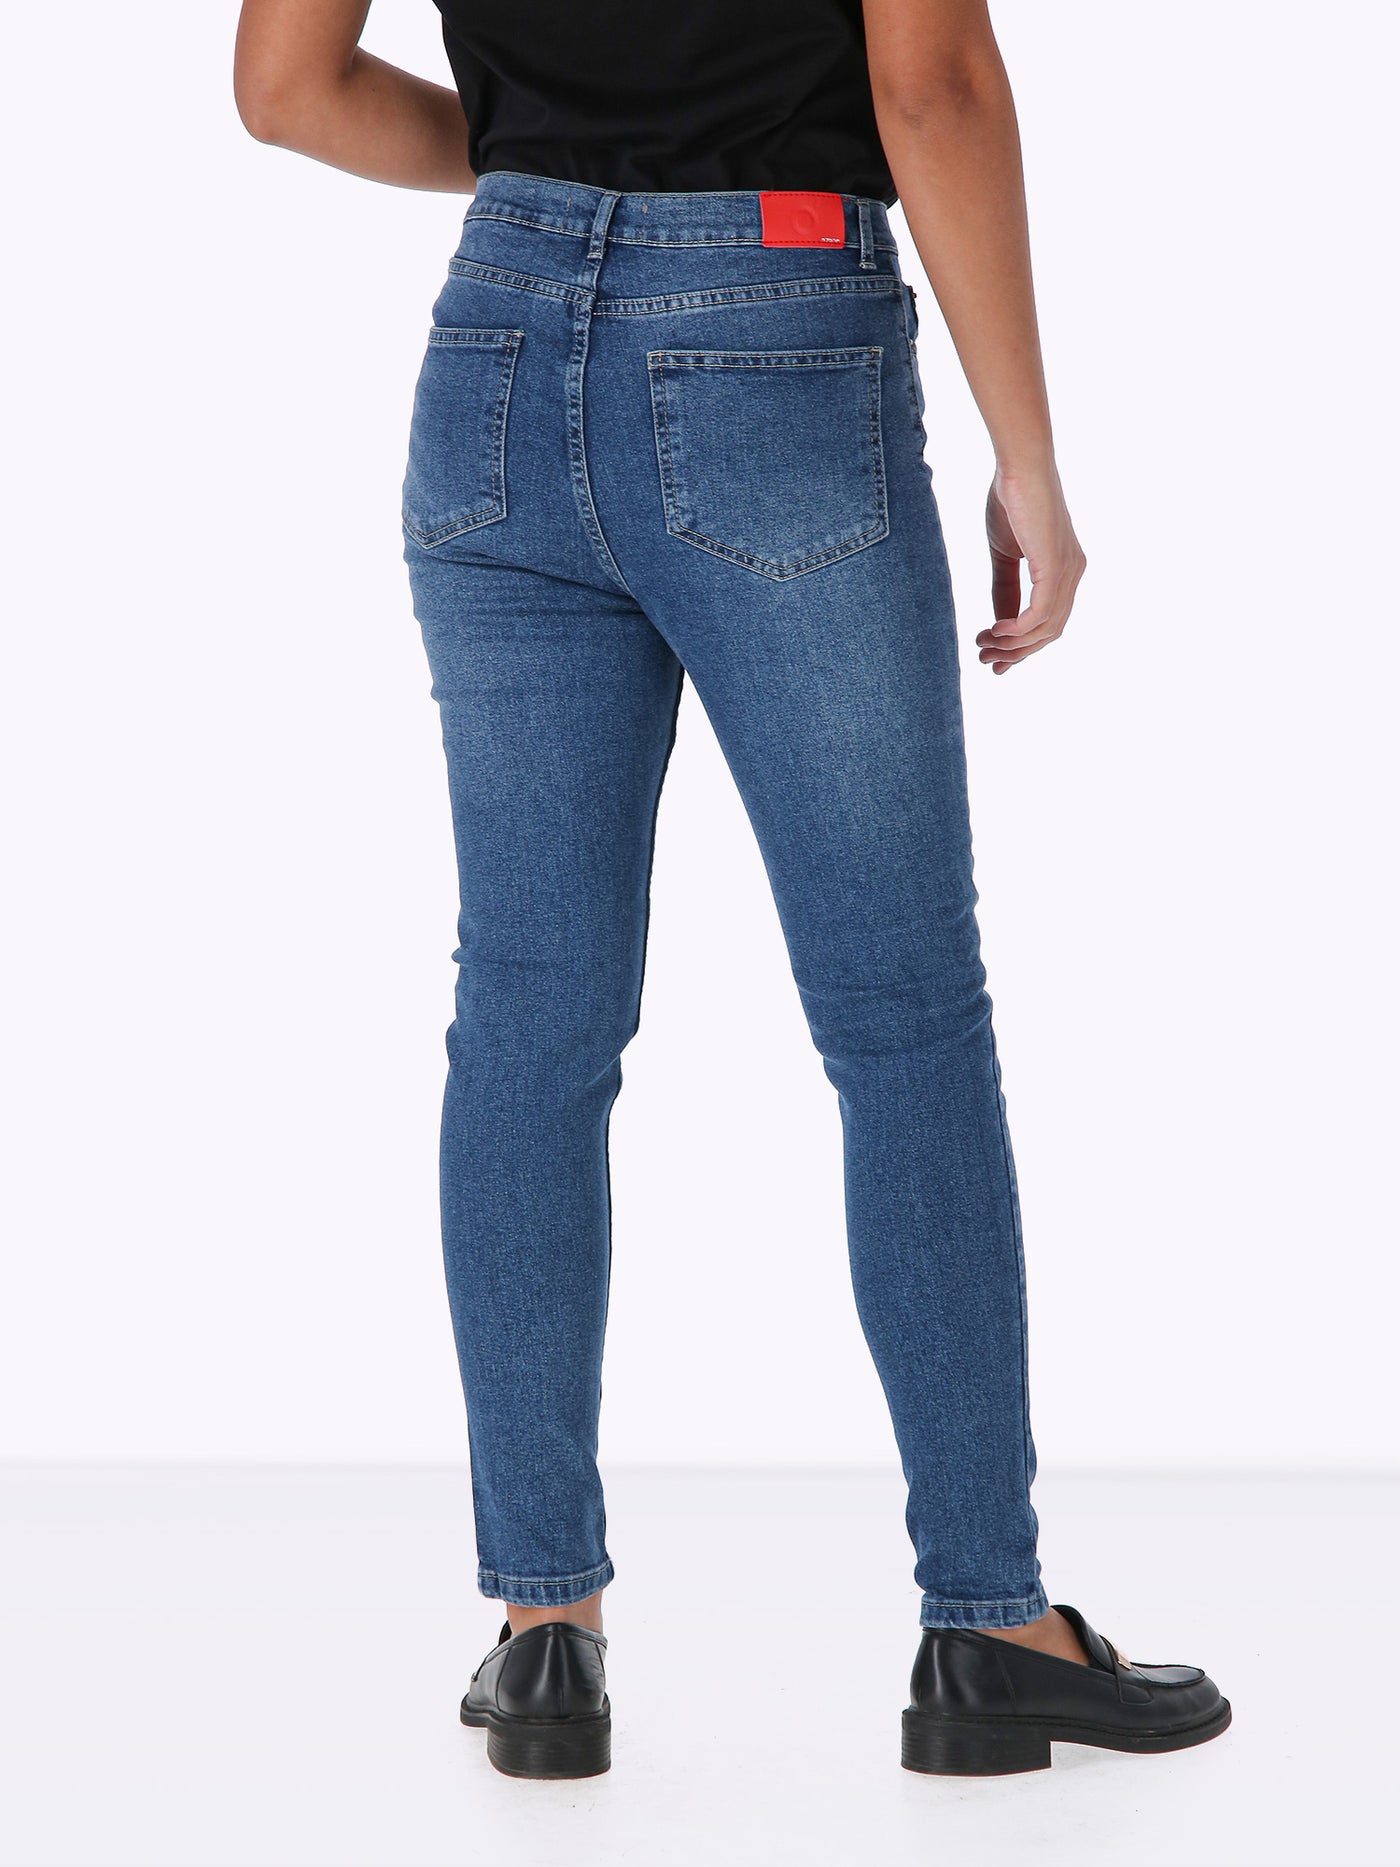 Jeans - Low Waist - Fly-zip